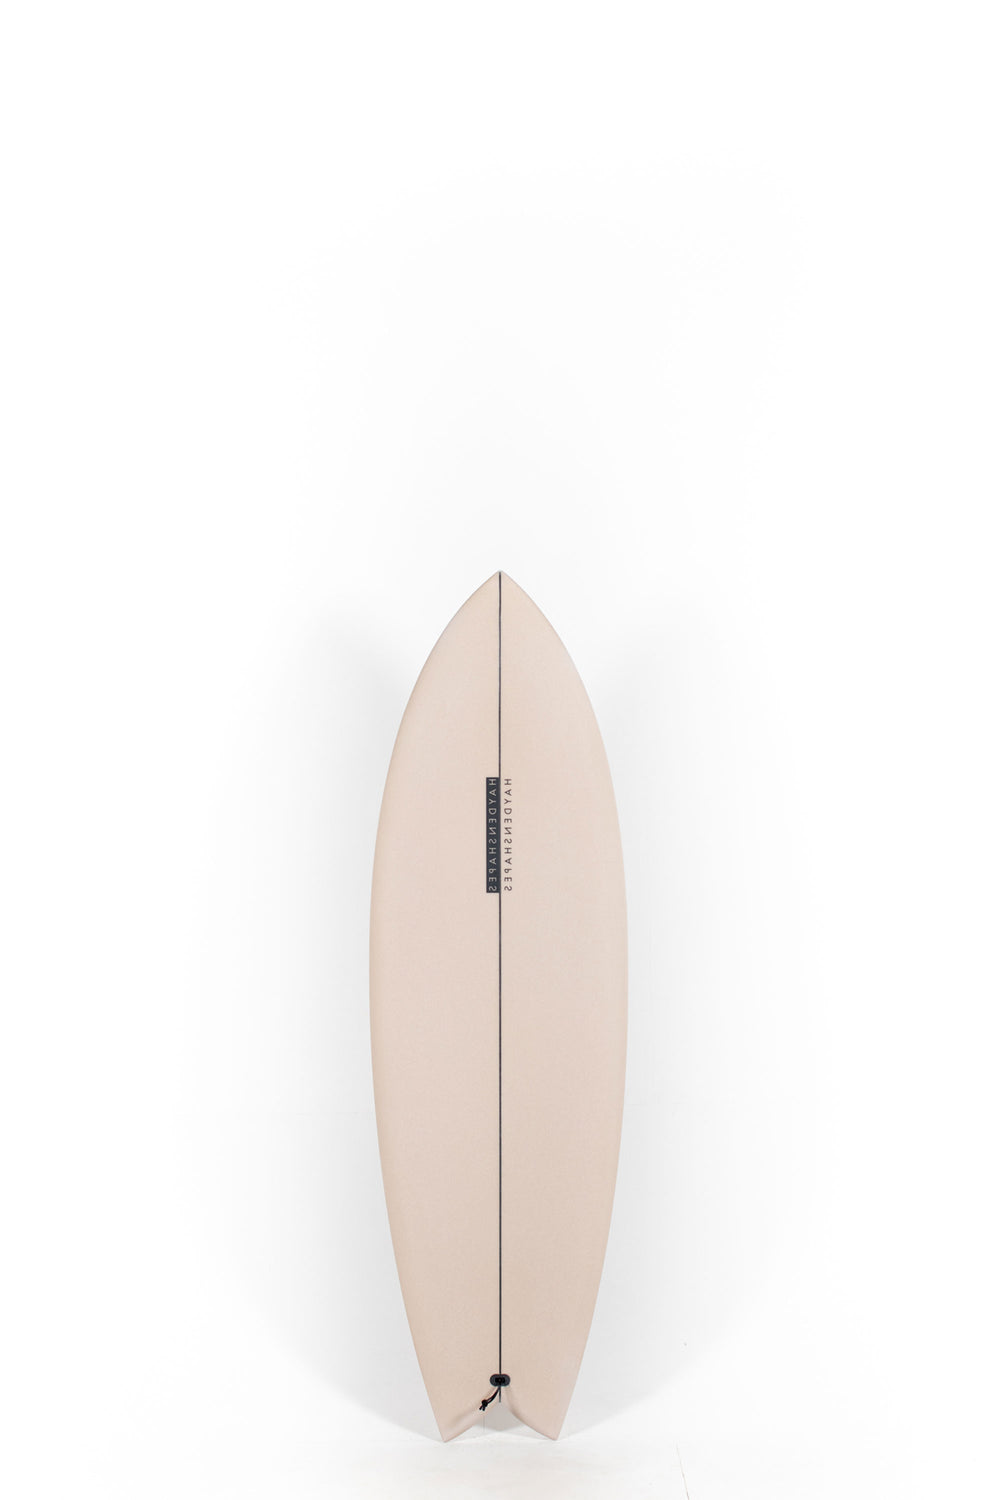 Pukas Surf Shop - HaydenShapes Surfboard - HYPTO KRYPTO TWIN PU - 5'6